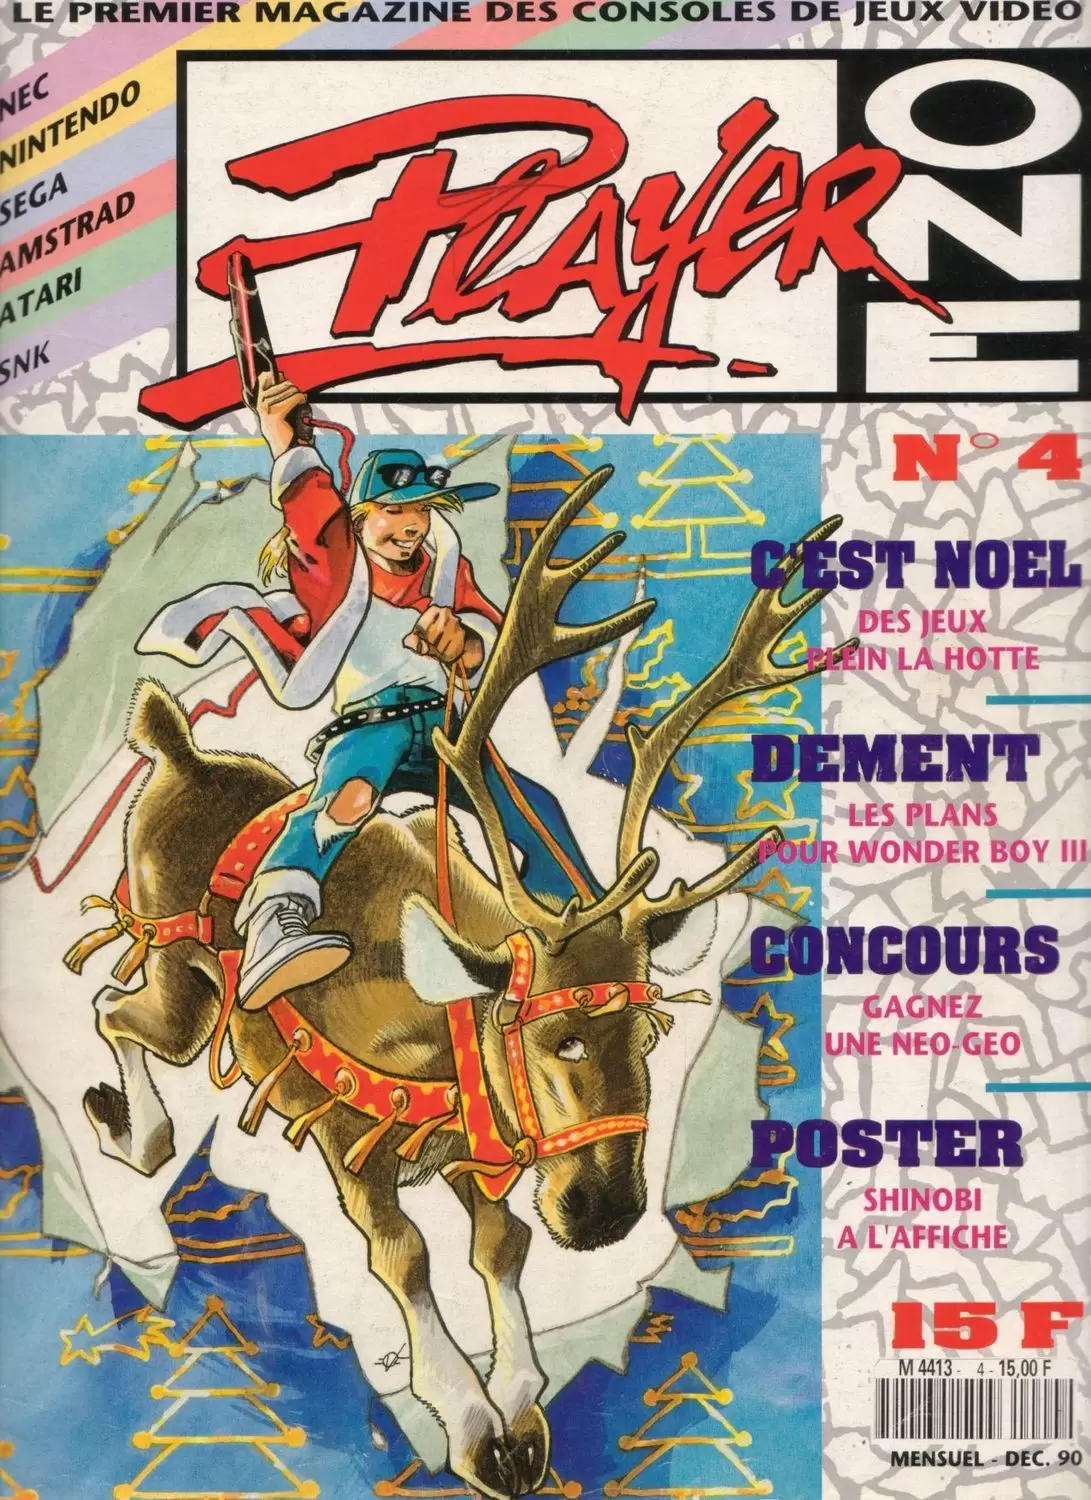 Player One - Magazine N°004